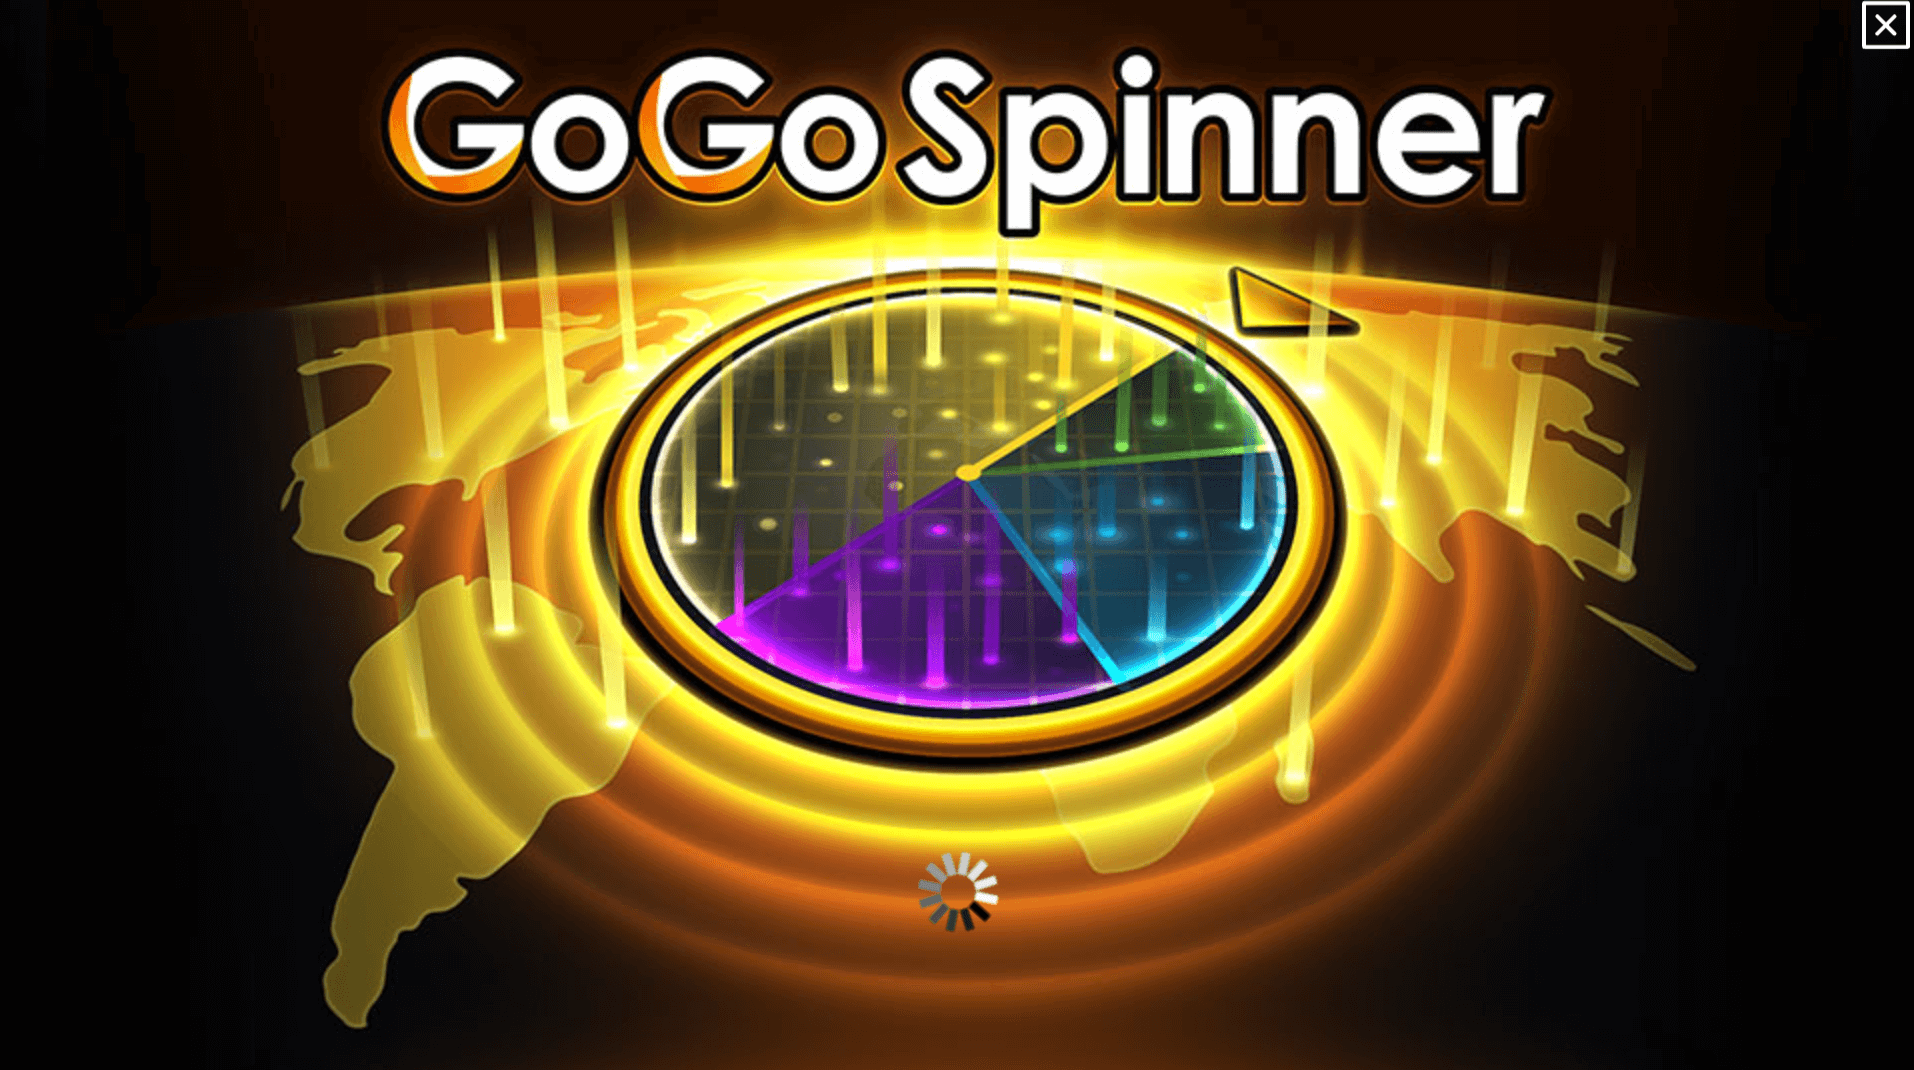 Go Go Spinner Spel proces